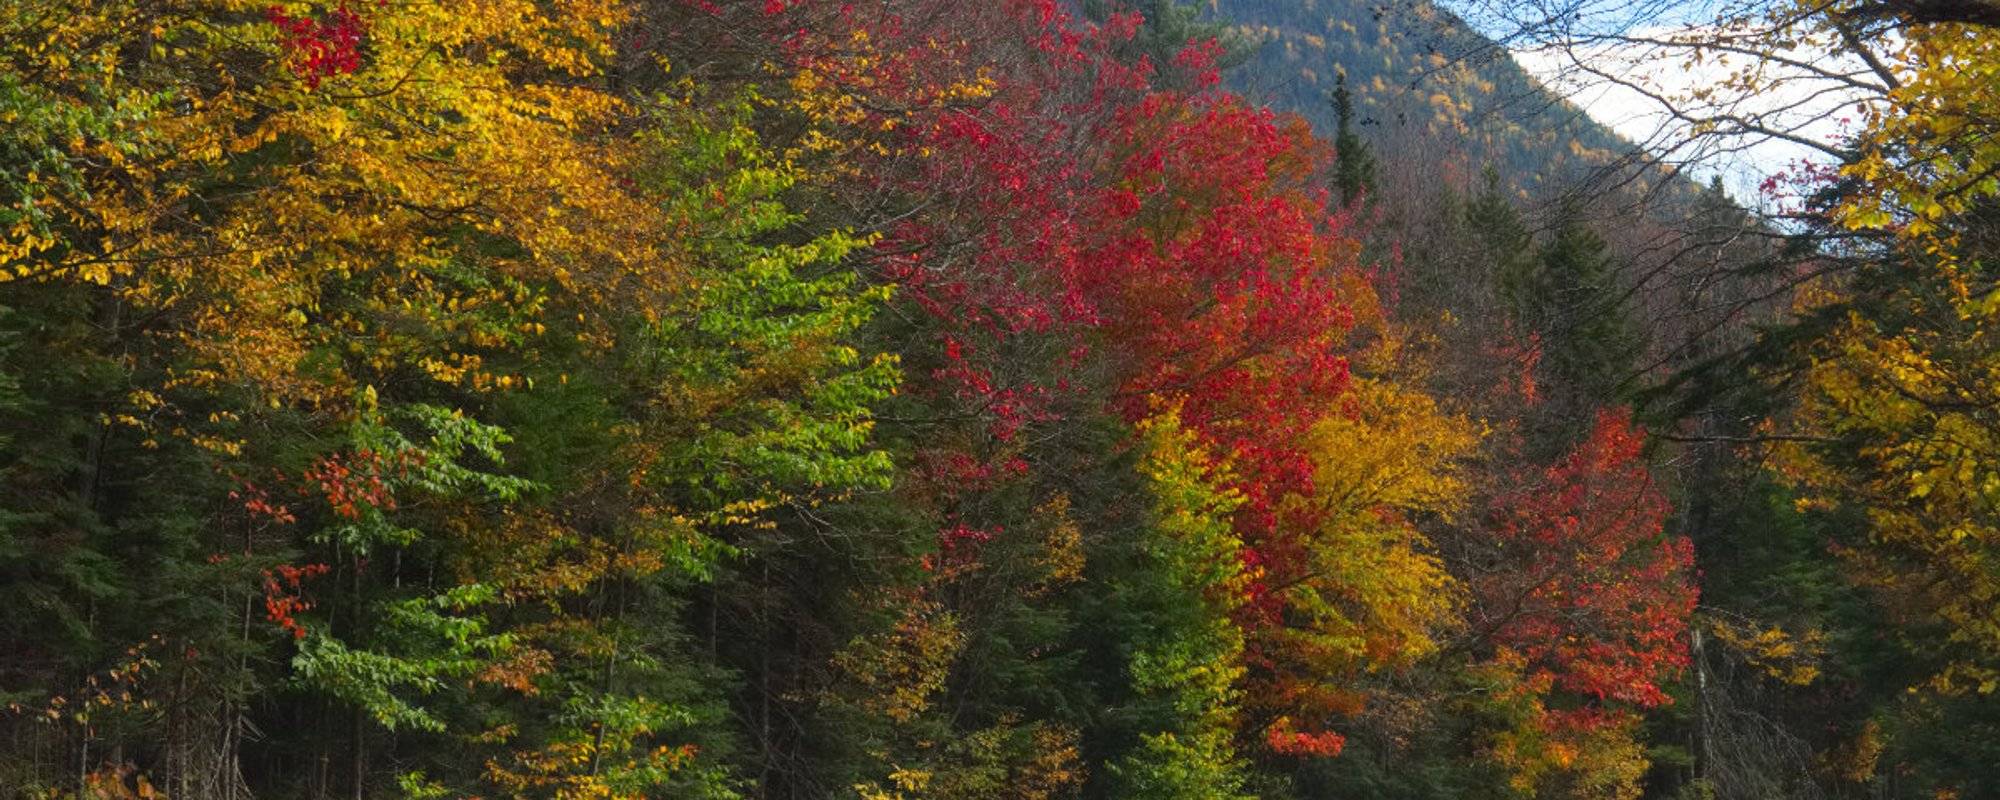 Autumn in New England - Life in Technicolor